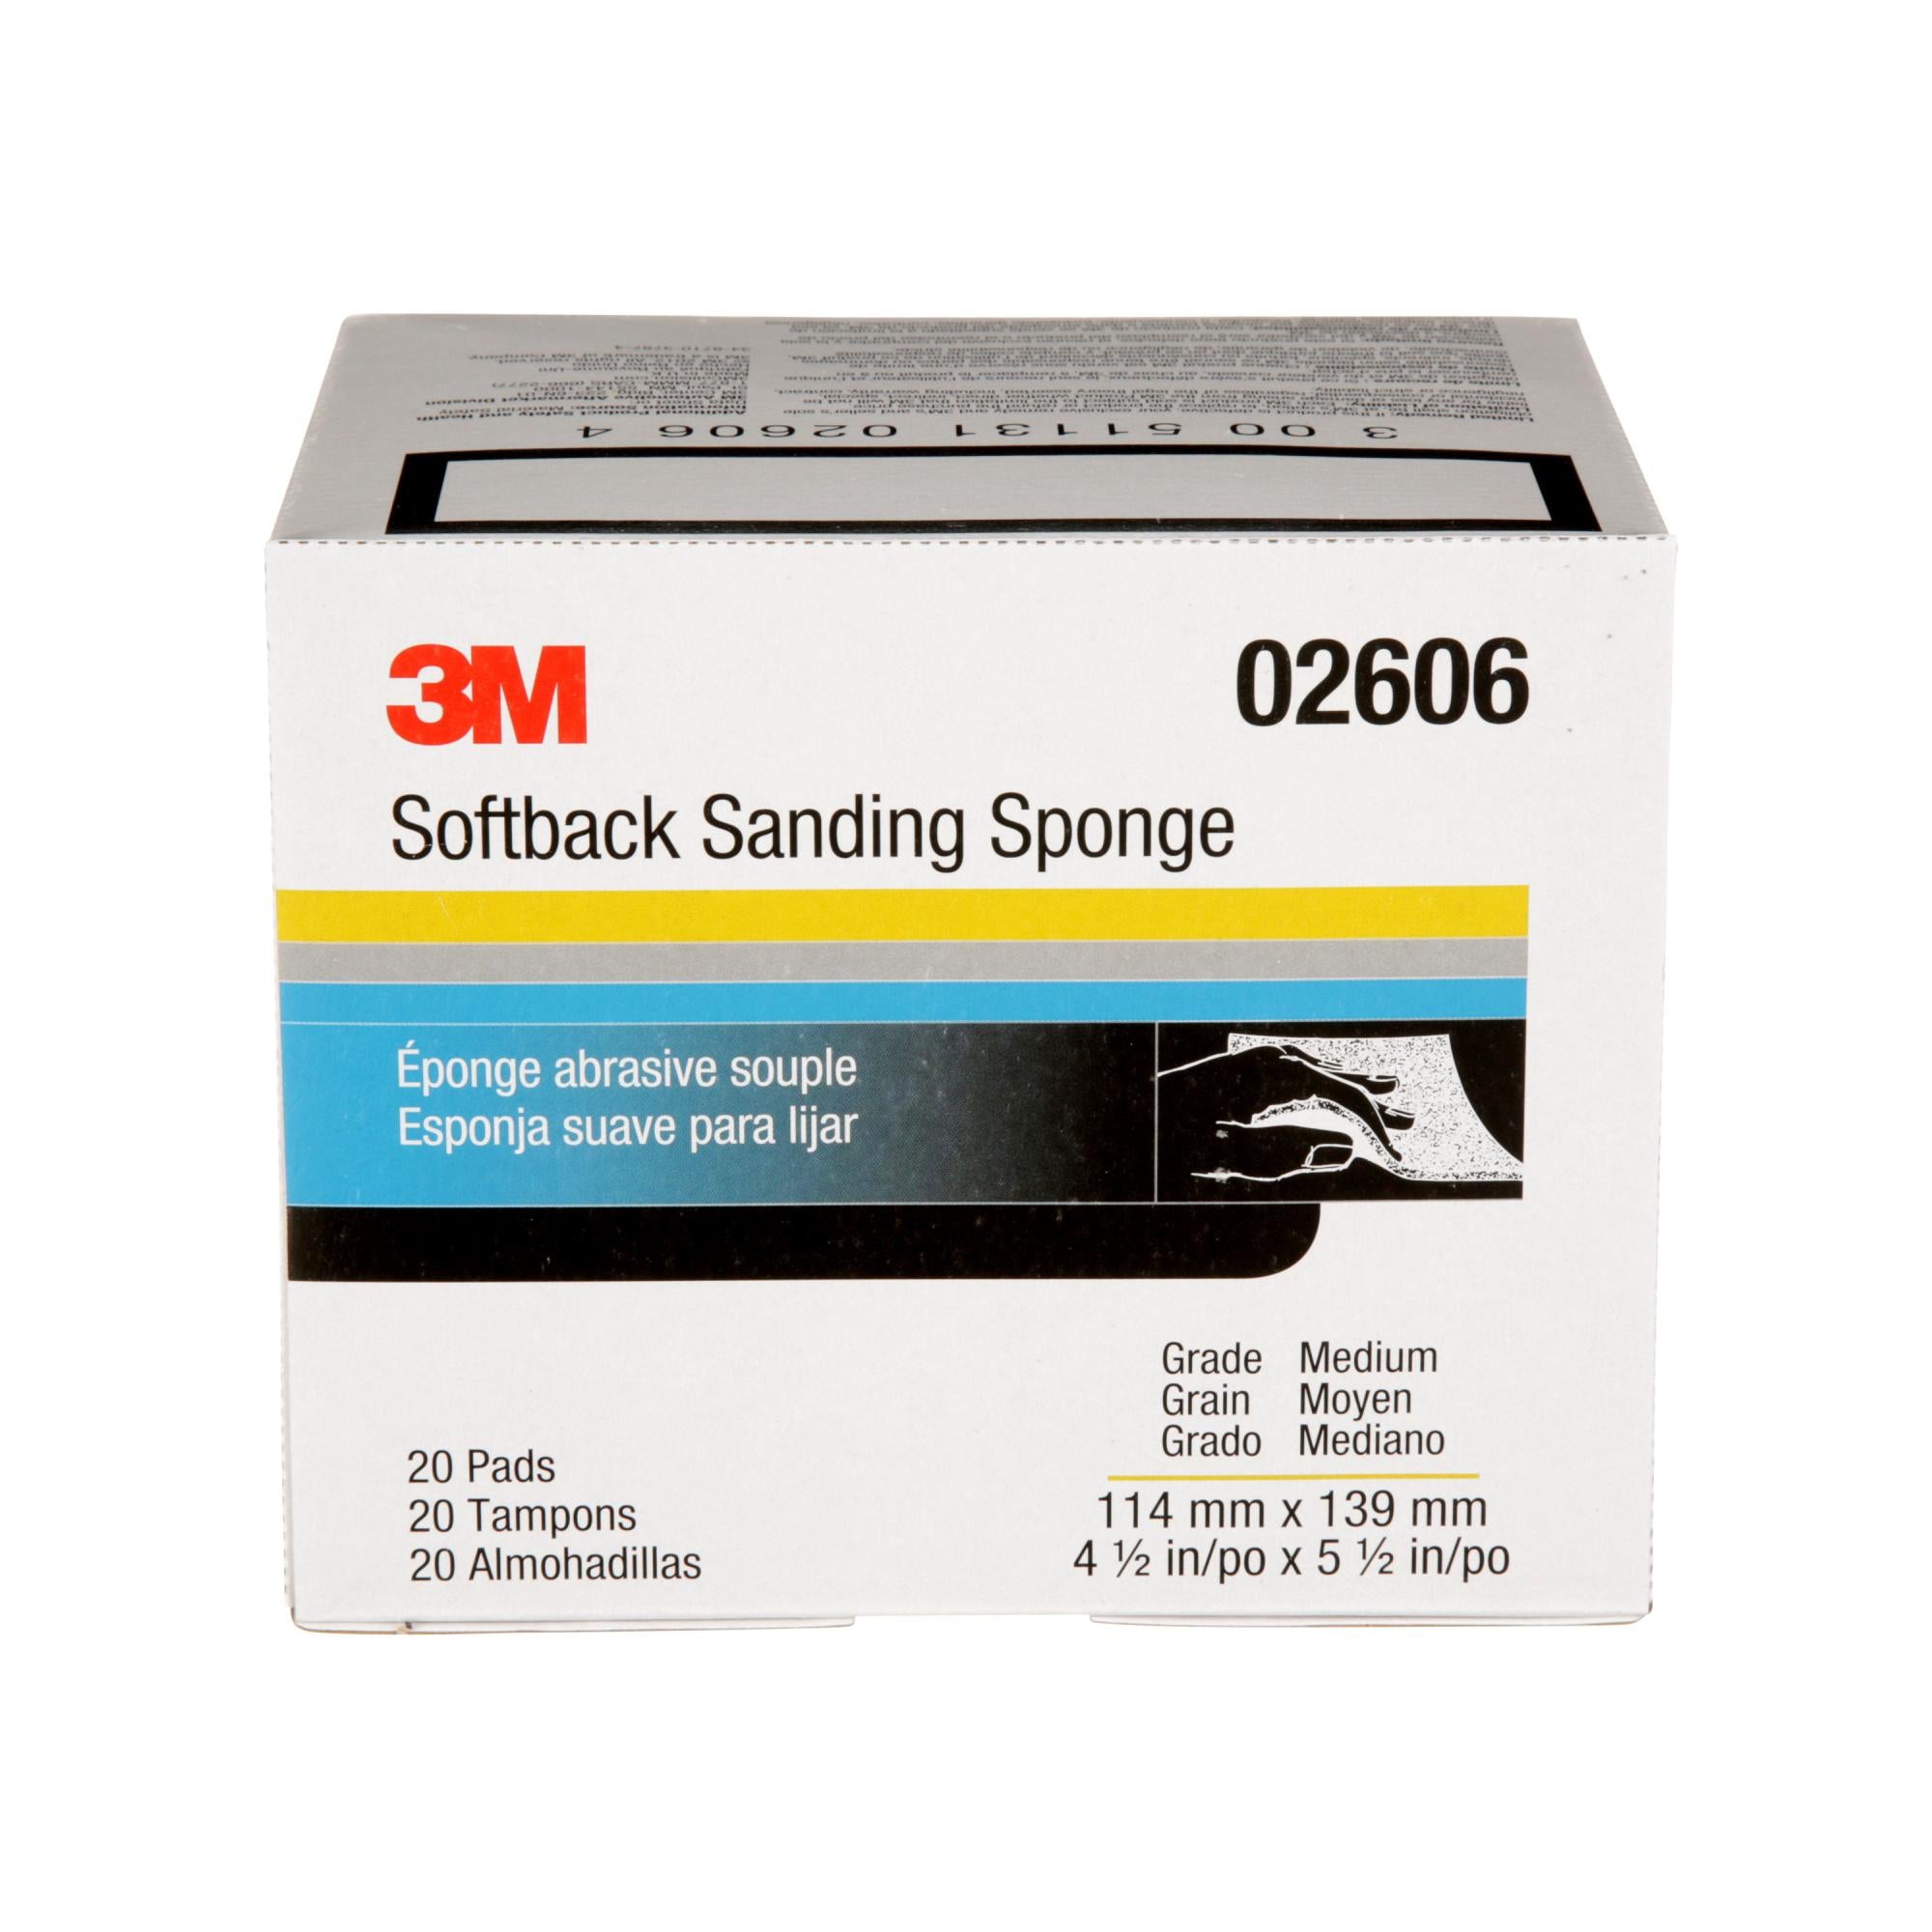 3M Softback Sanding Sponge 02606, 4-1/2 in x 5-1/2 in, (115mm x
140mm), Medium